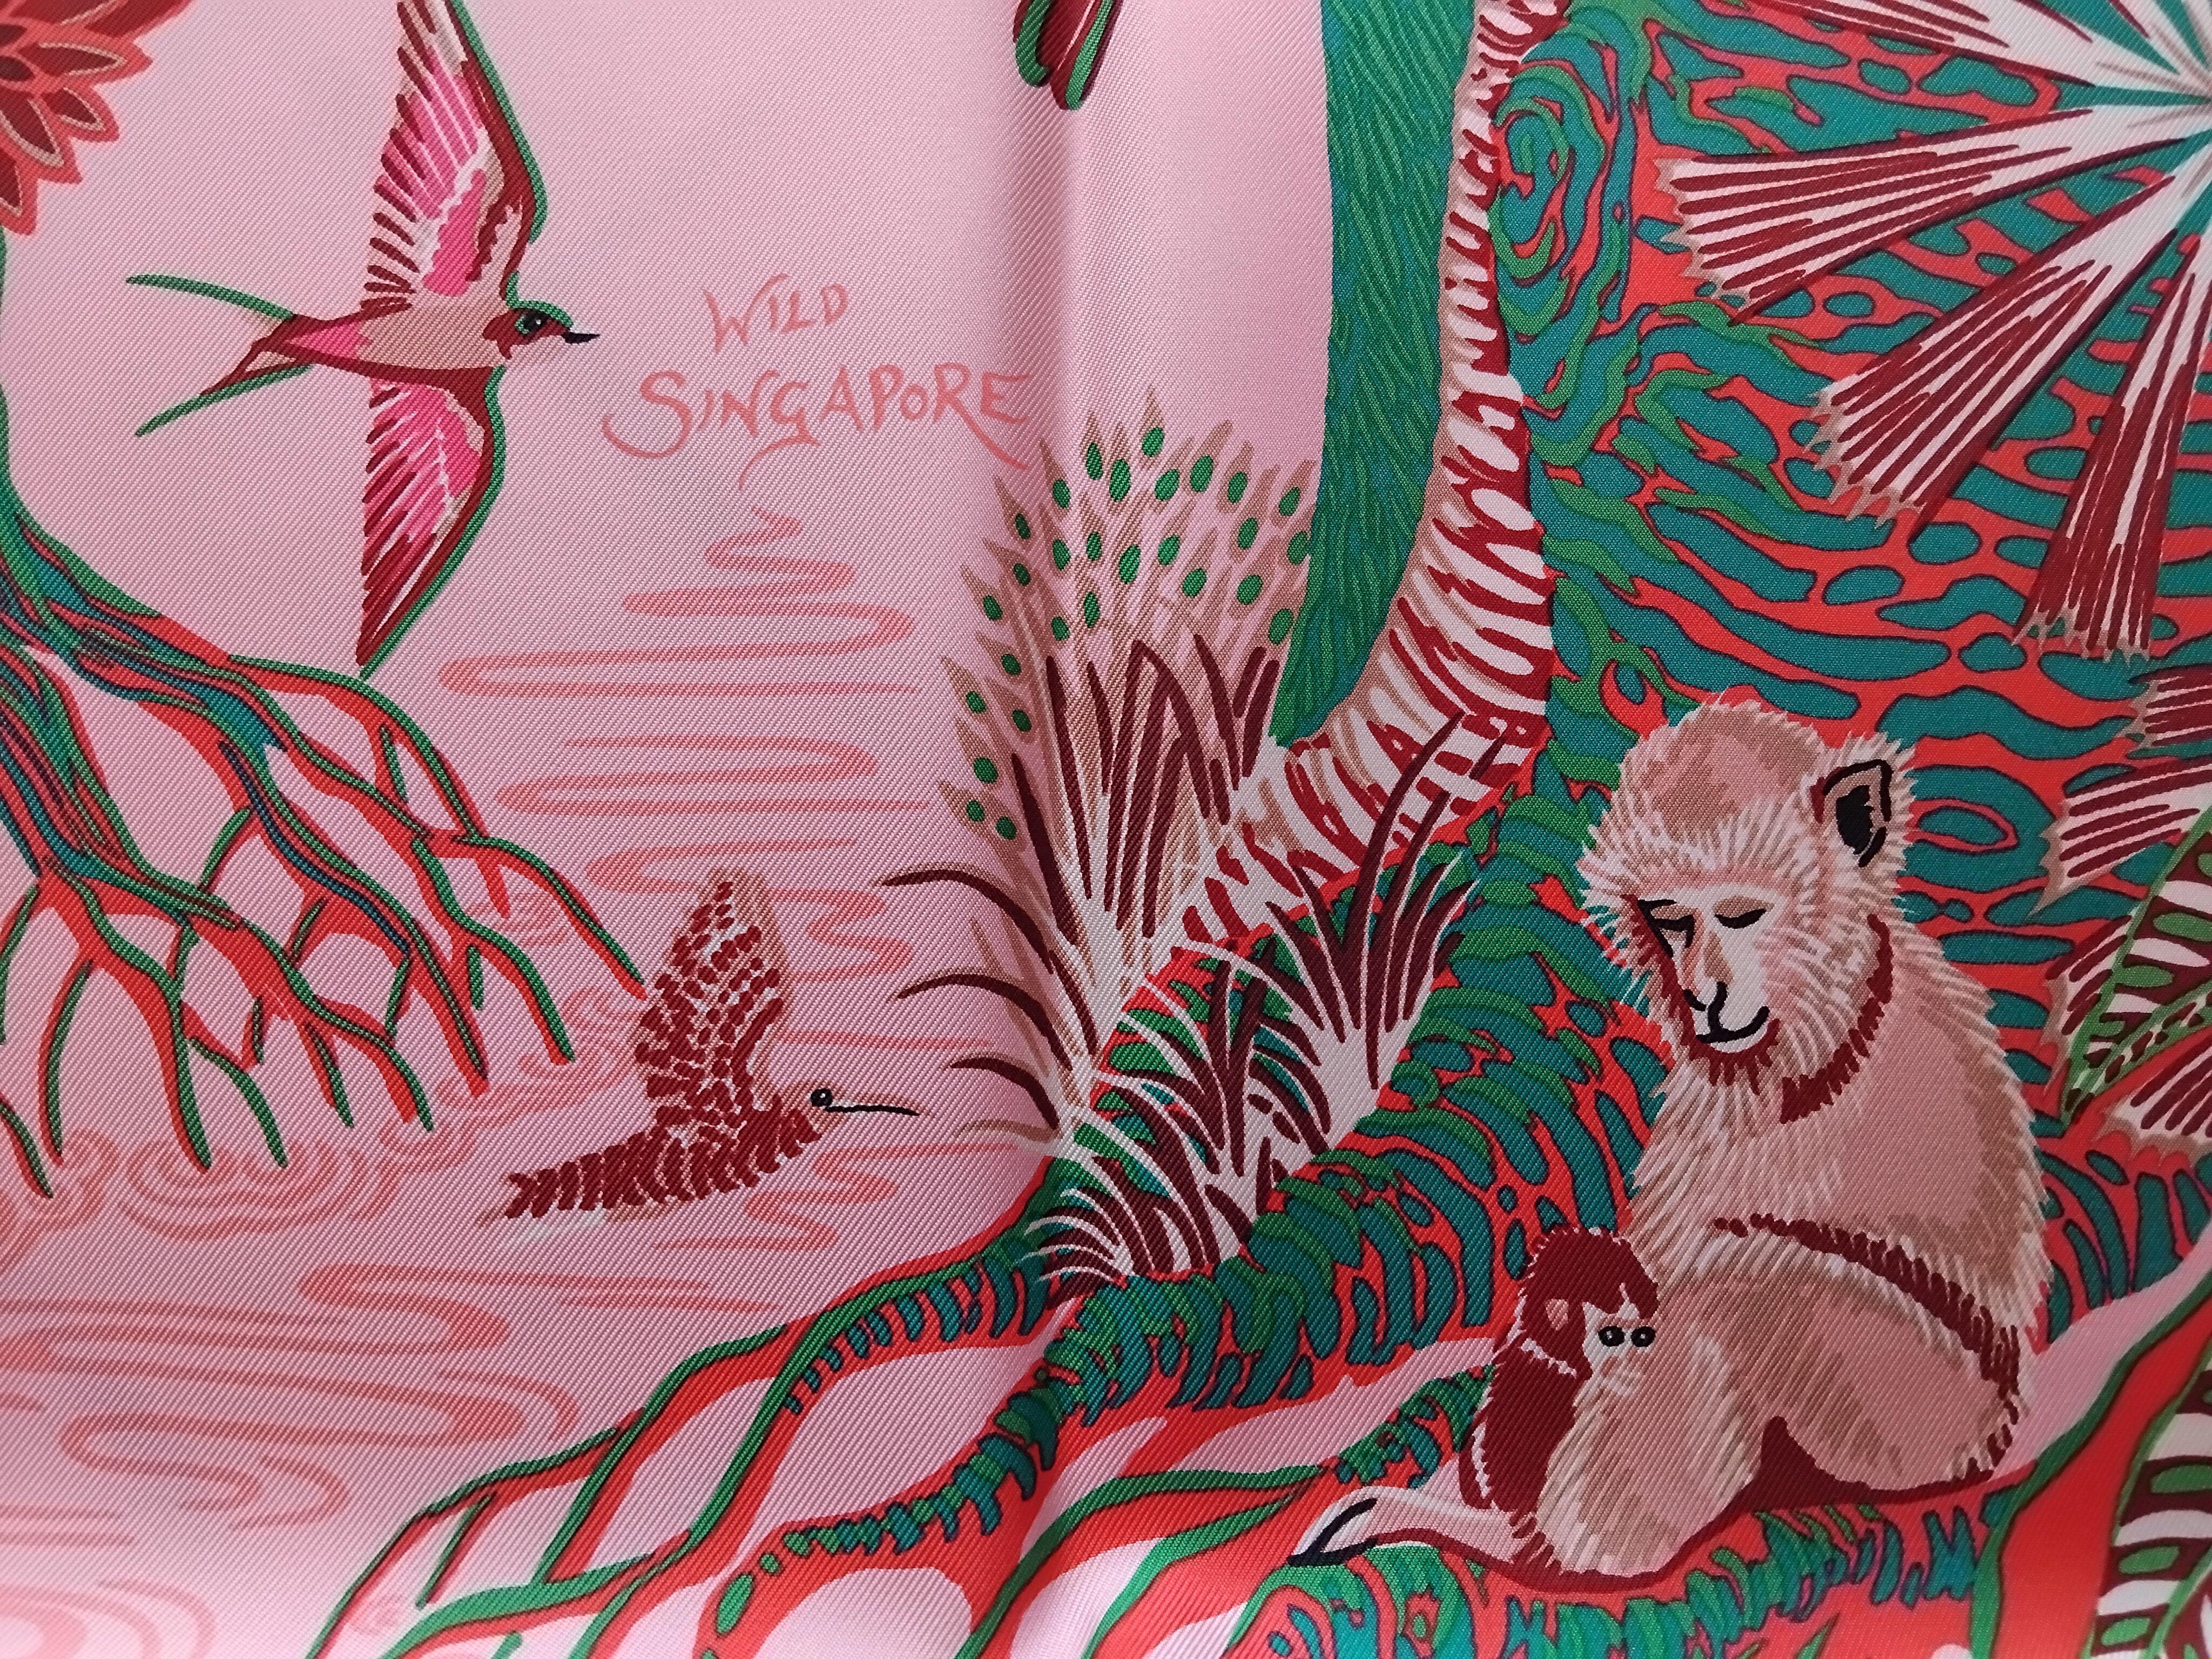 Hermès Silk Scarf Wild Singapore Alice Shirley Pink Green 35' For Sale 10